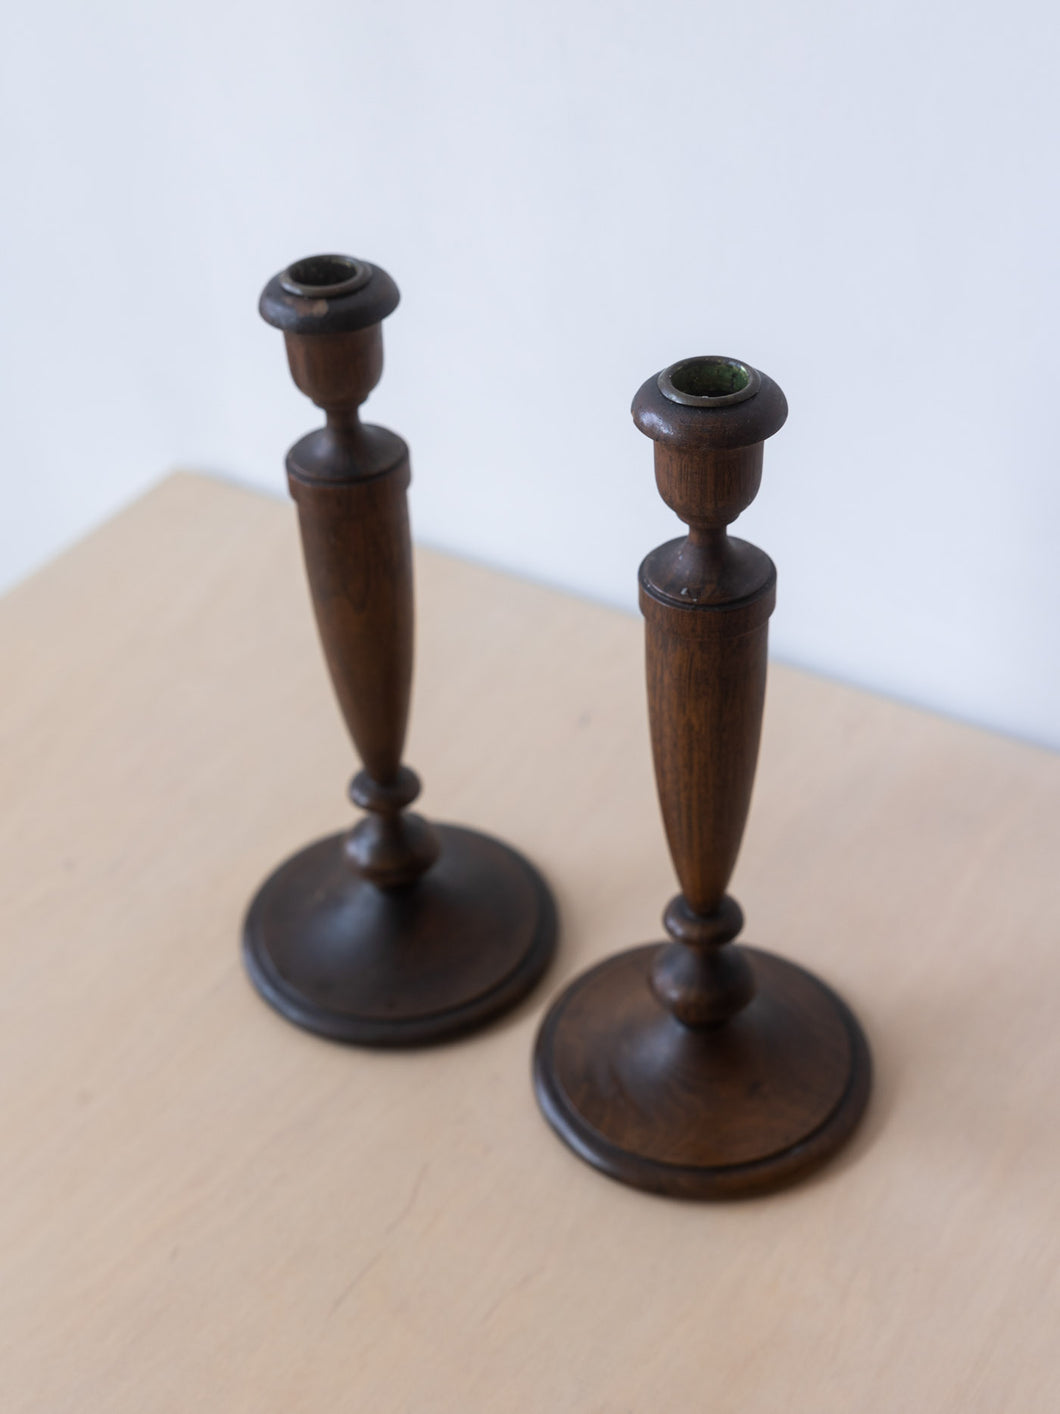 Vintage Pair of Wooden Candlesticks